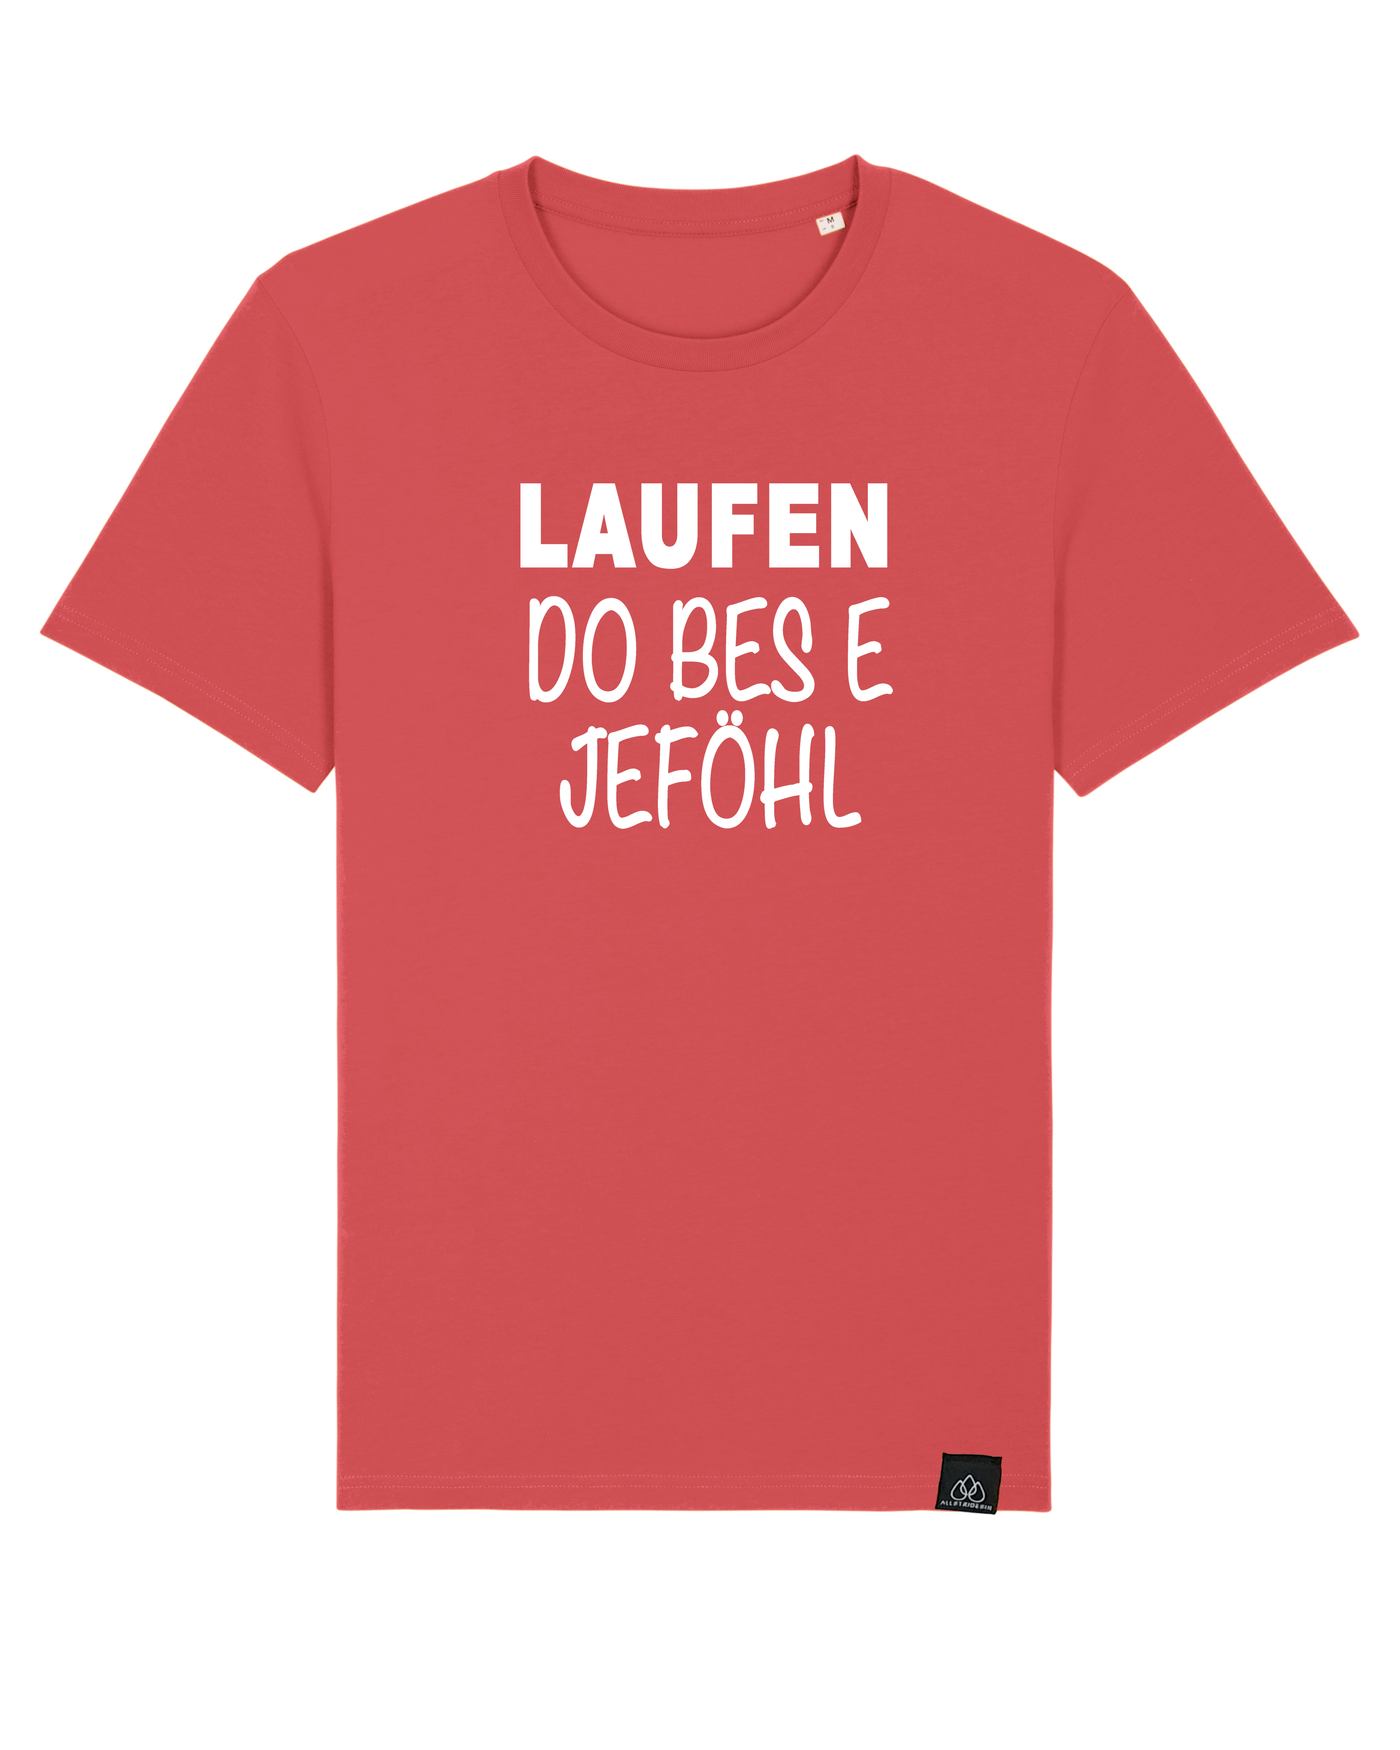 Laufen do bes e Jeföhl Iconic Unisex T-Shirt ALLSTRIDESIN®